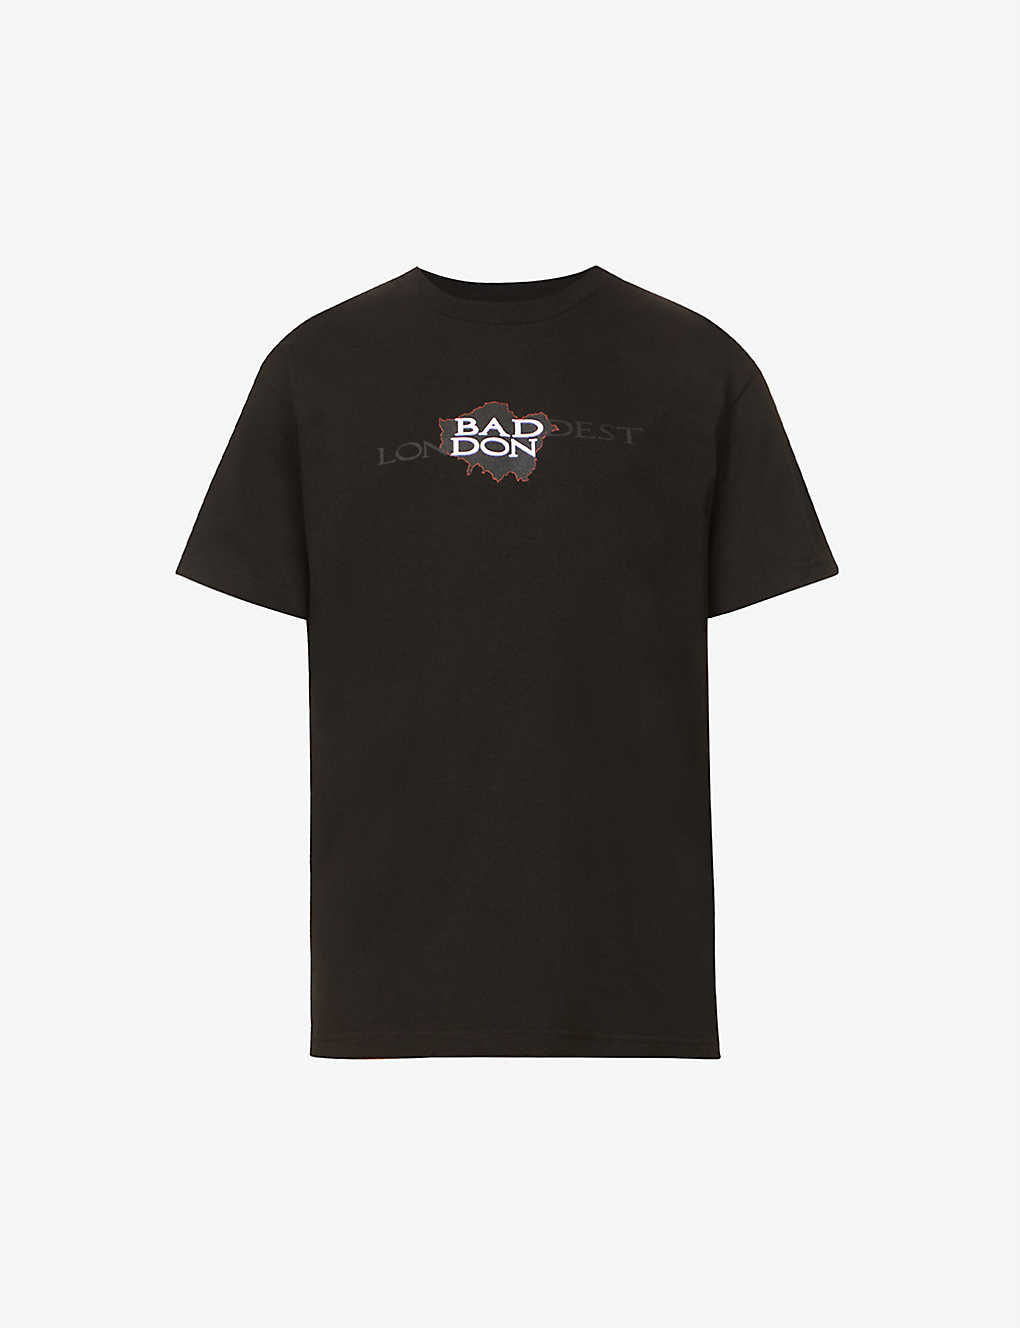 Baddest Skate Shop London Map Graphic-print Cotton-jersey T-shirt In Black